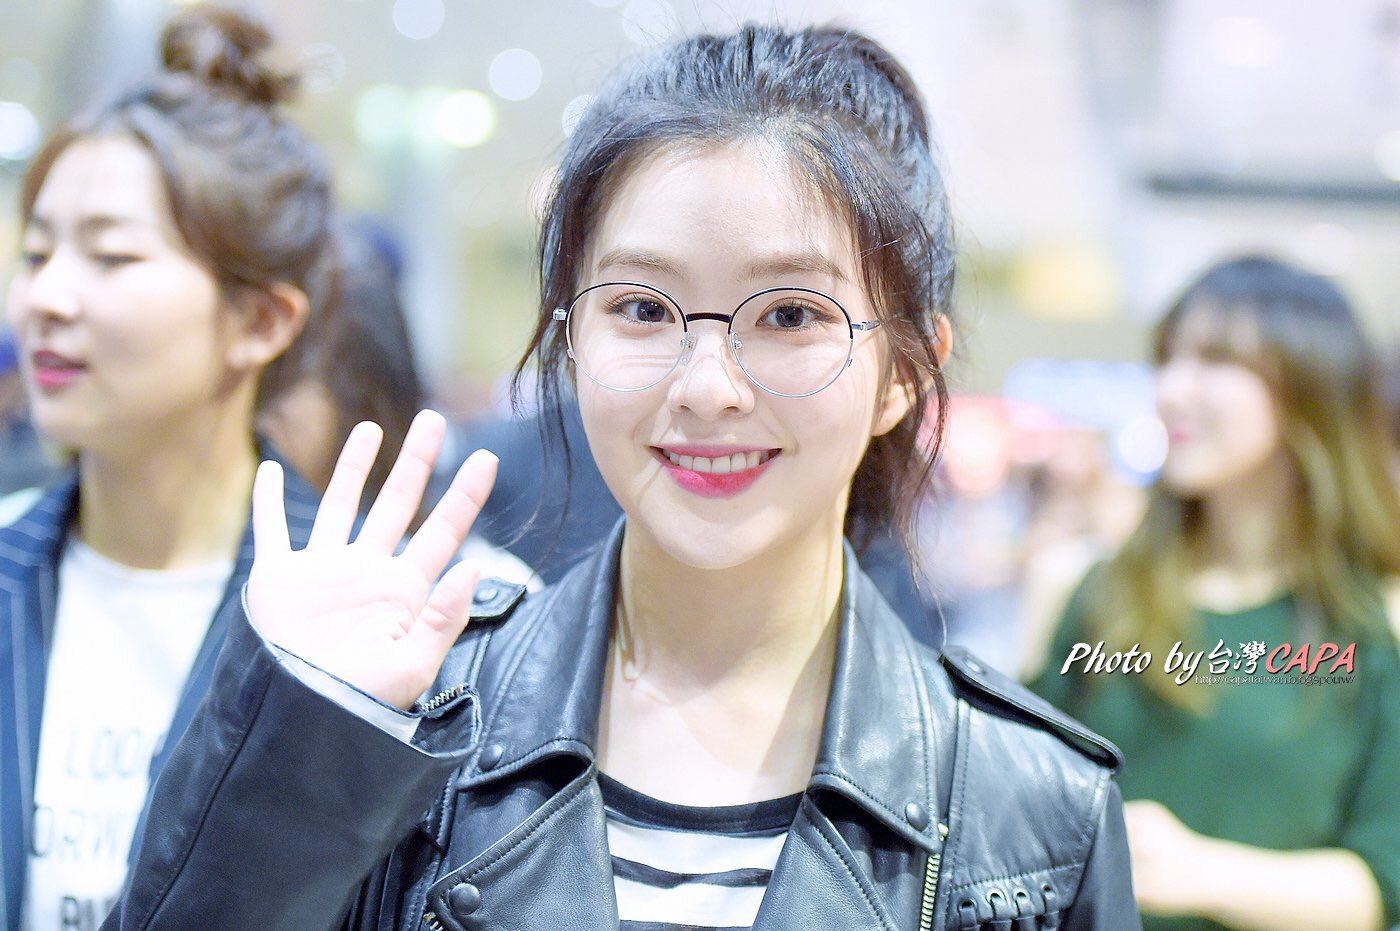 Irene looks super HOT in nerdy glasses + leather jacket - Koreaboo